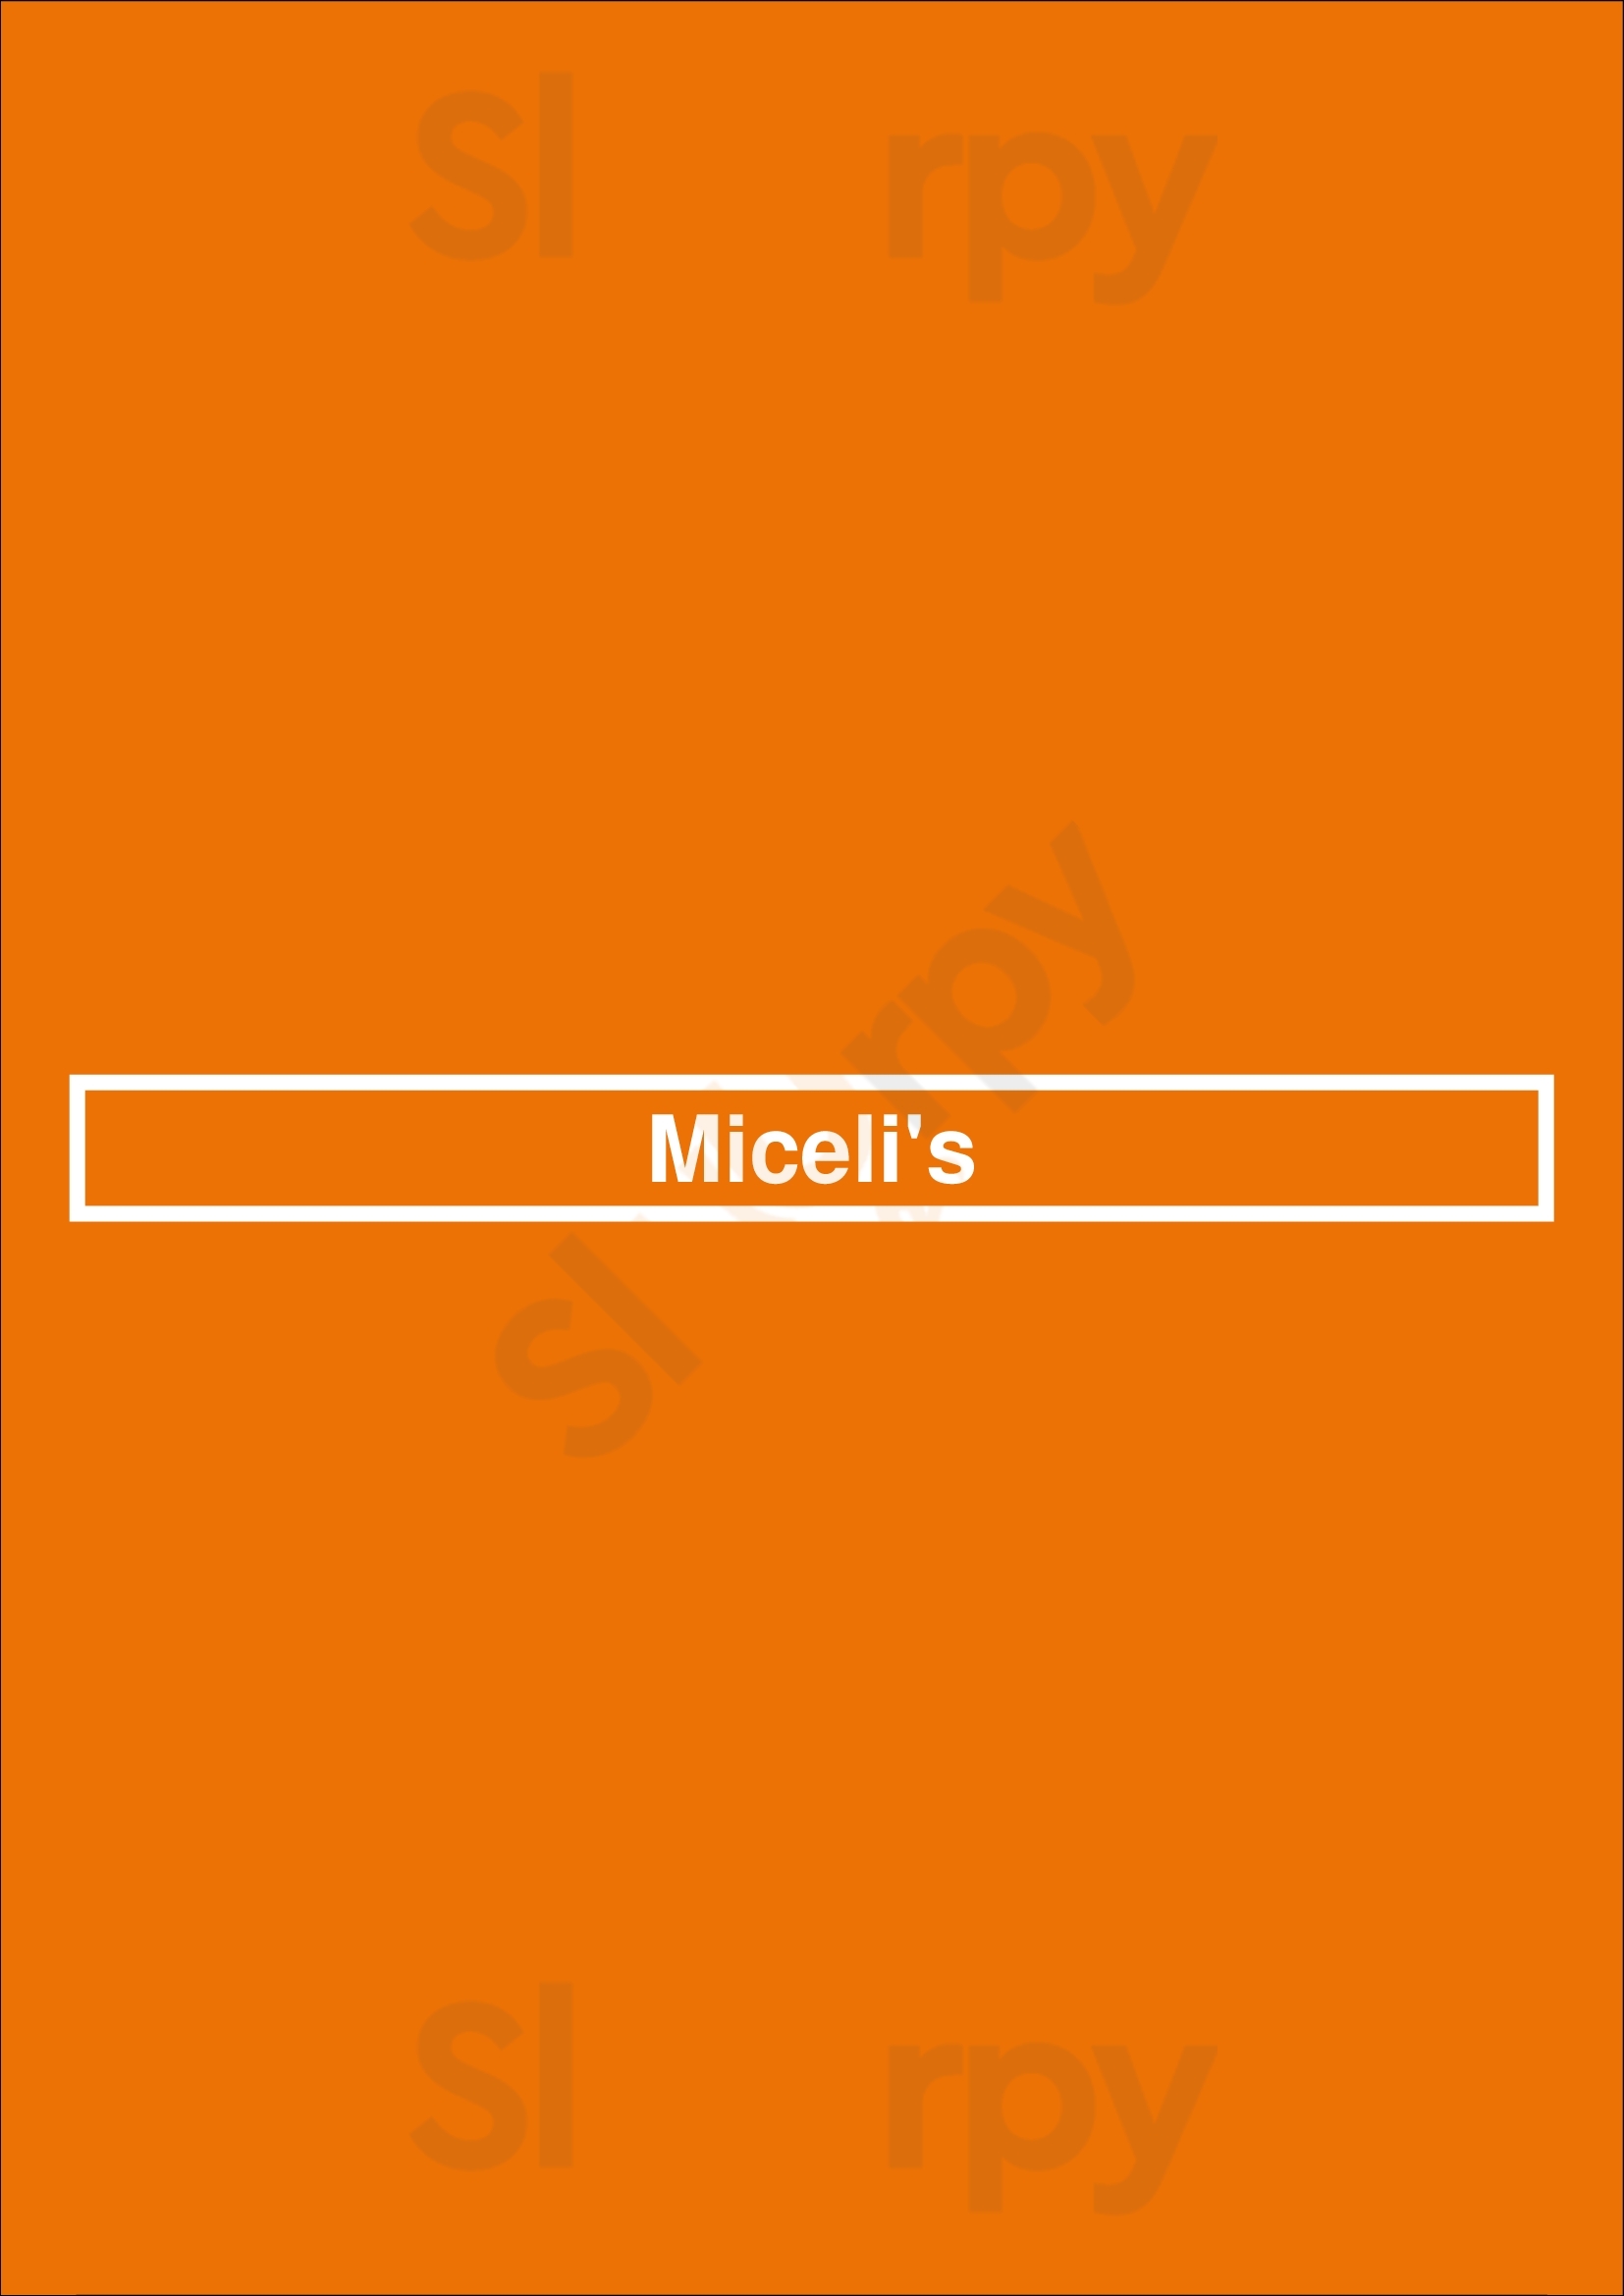 Miceli's Los Angeles Menu - 1